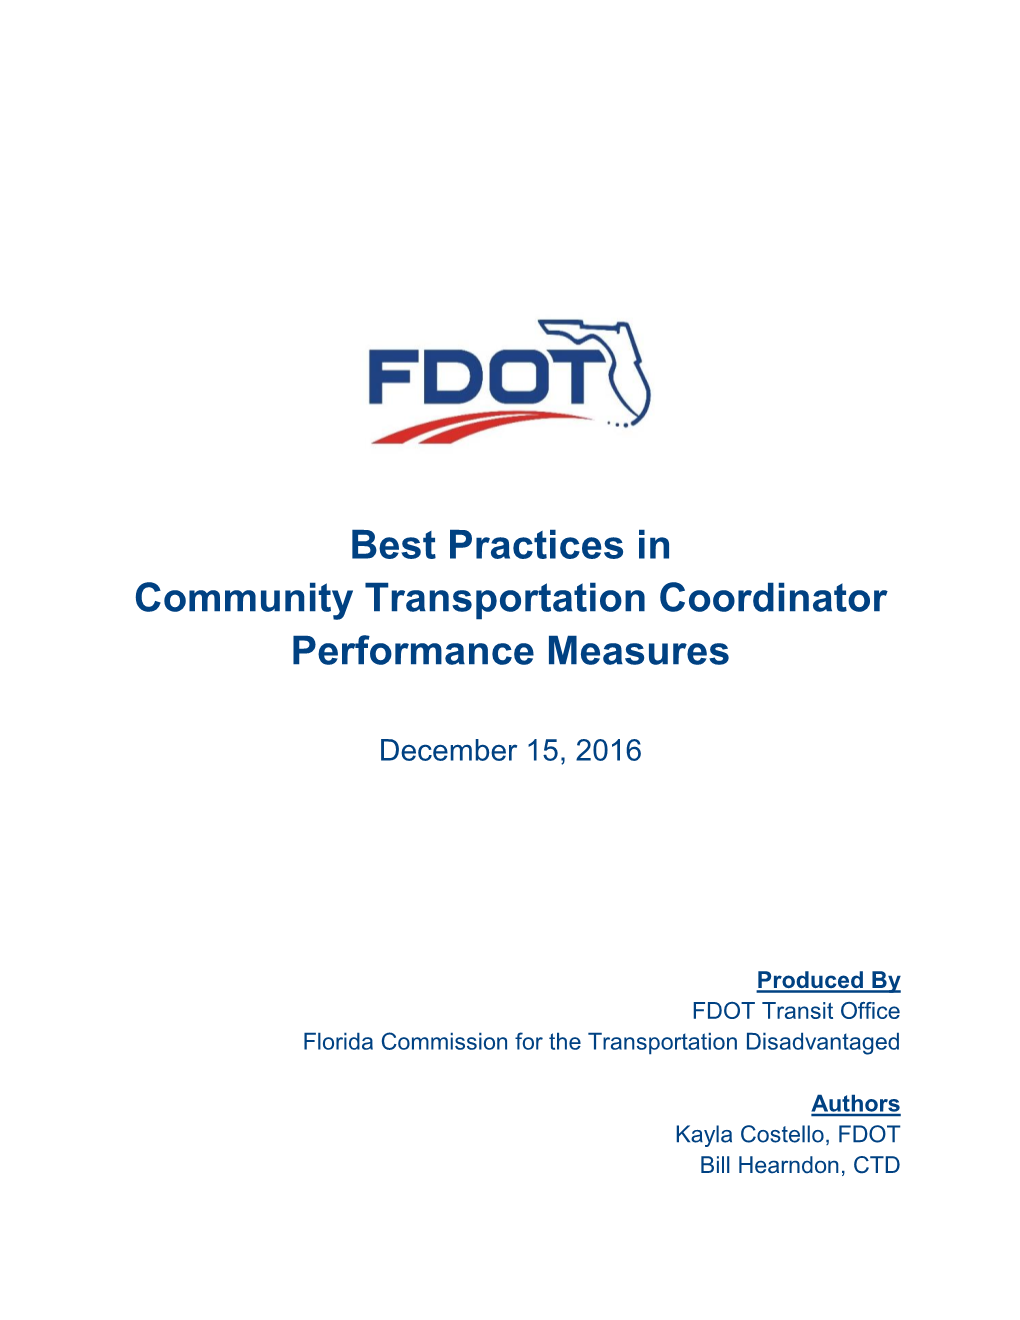 Best Practices in Community Transportation Coordinator Performance Measures